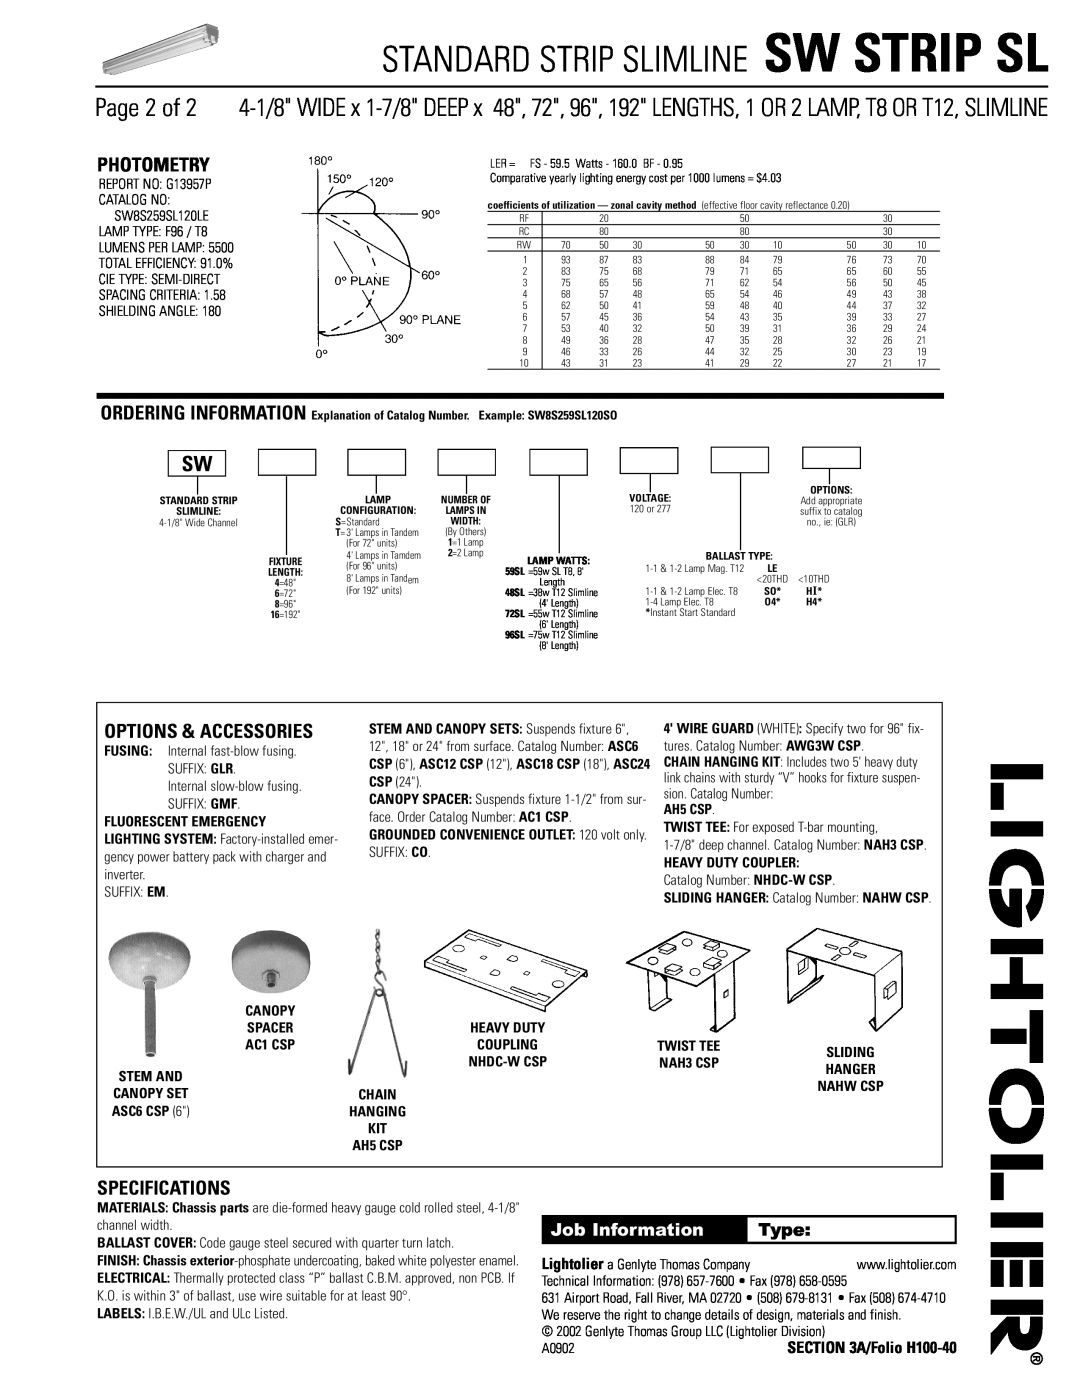 Lightolier SW STRIP SL Photometry, Specifications, Standard Strip Slimline Sw Strip Sl, Options & Accessories, Type 